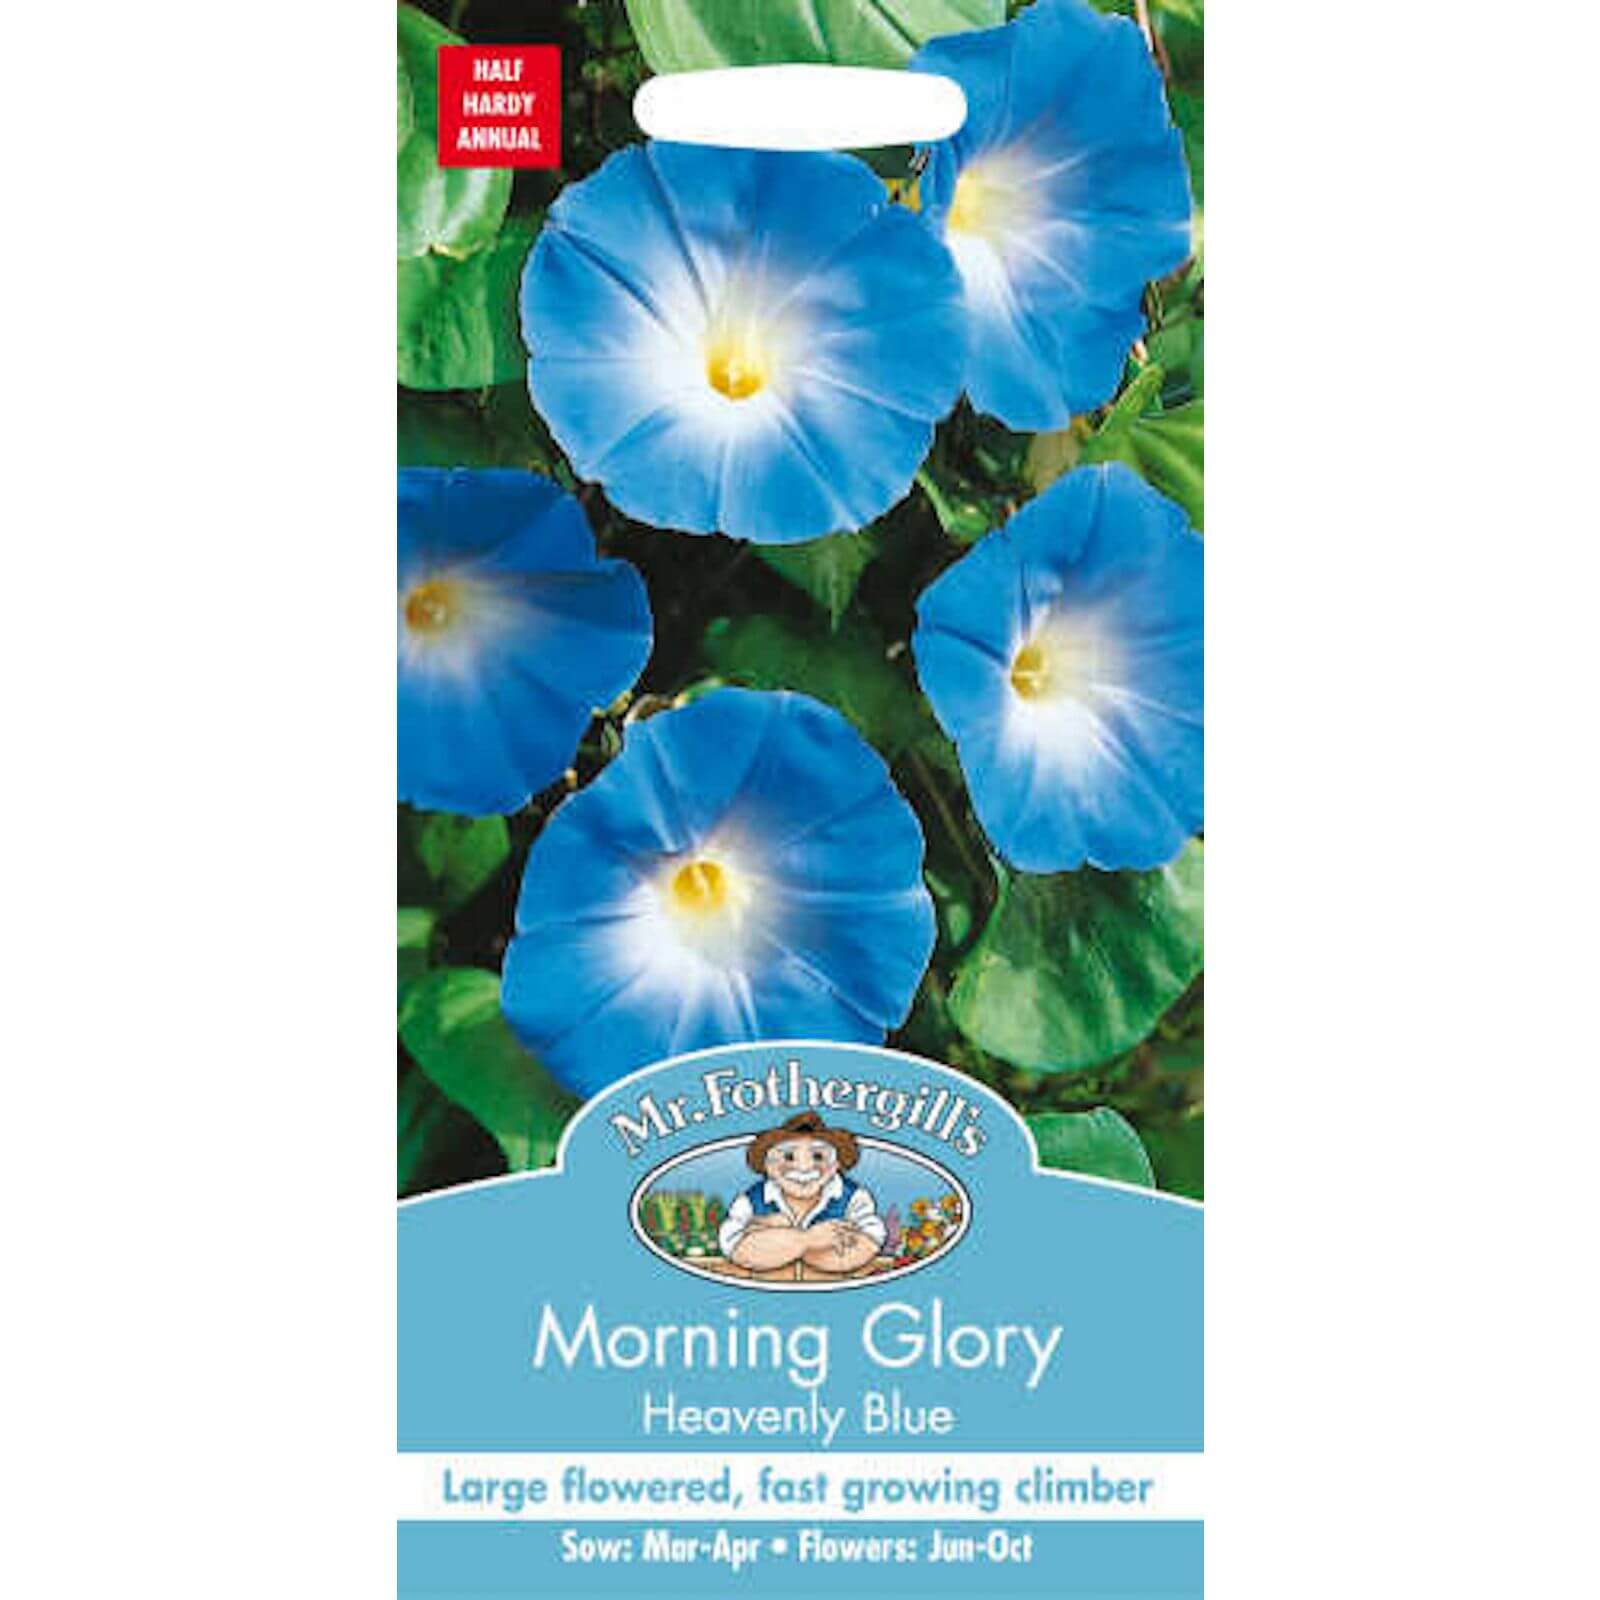 Mr. Fothergill's Morning Glory Heavenly Blue (Ipomoea Purpurea) Seeds